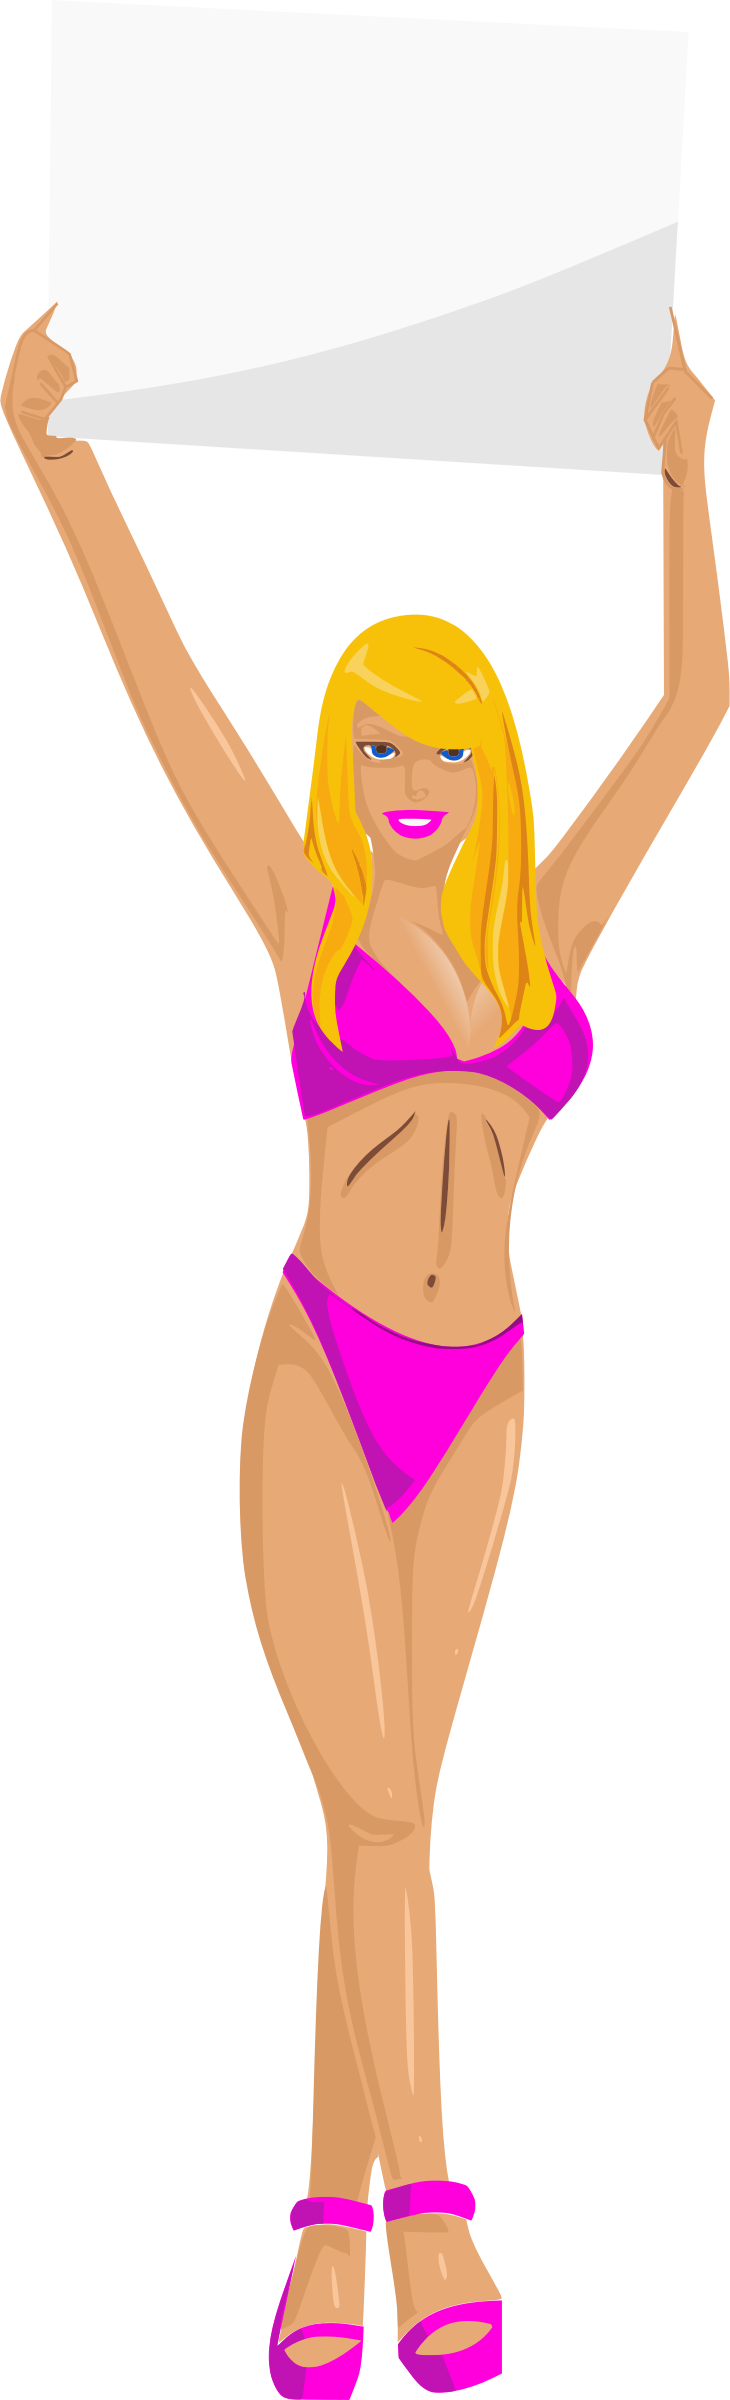 clipart girl in bikini - photo #39